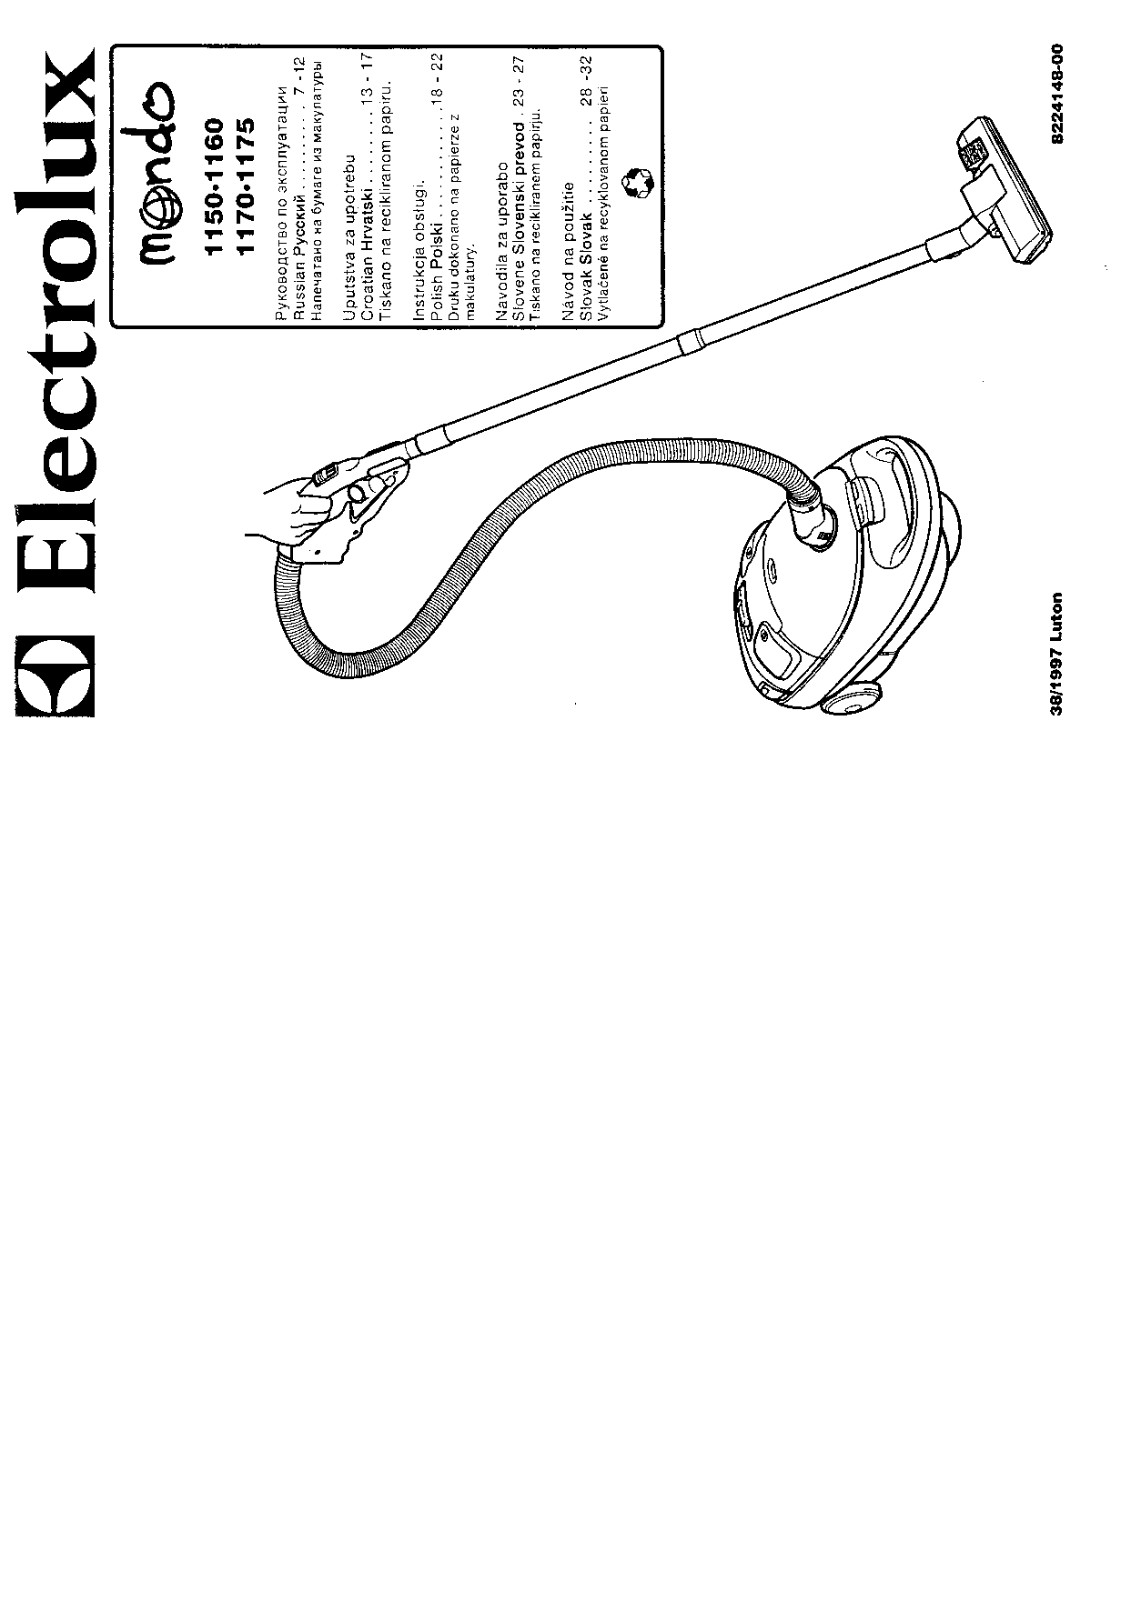 Electrolux mondo User Manual